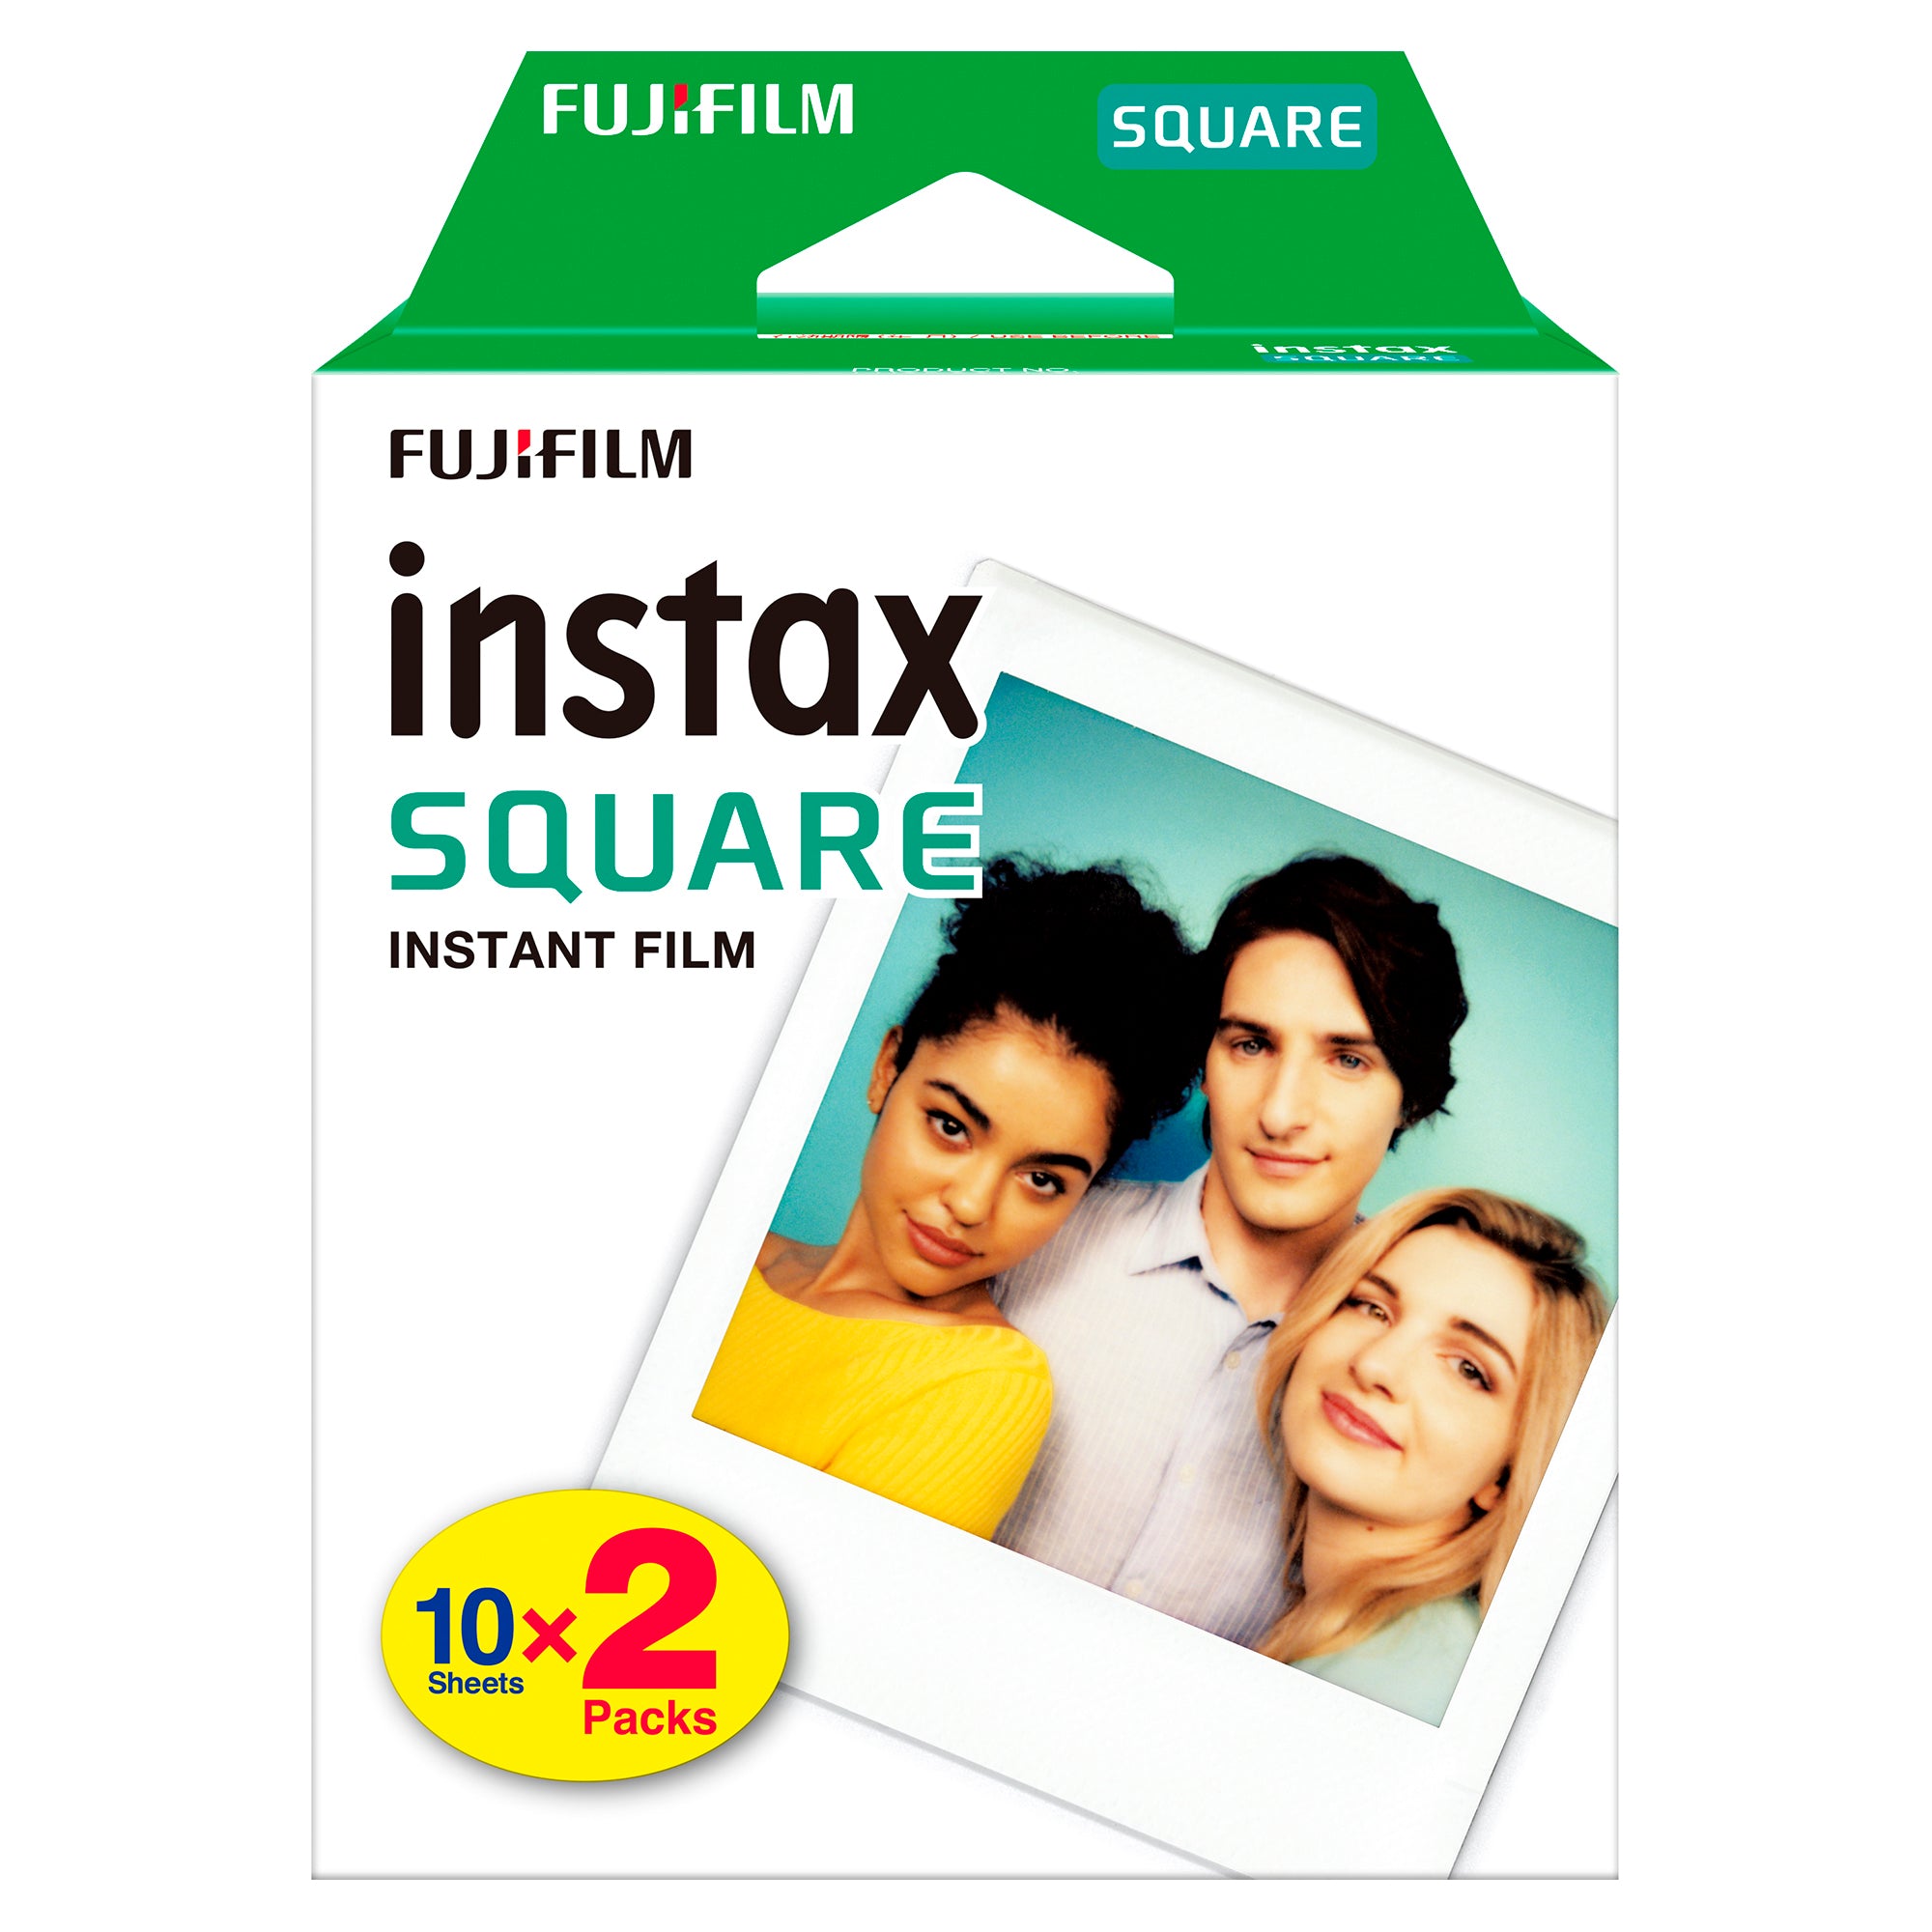 Fujifilm Instax Mini 2-Pack Instant Film